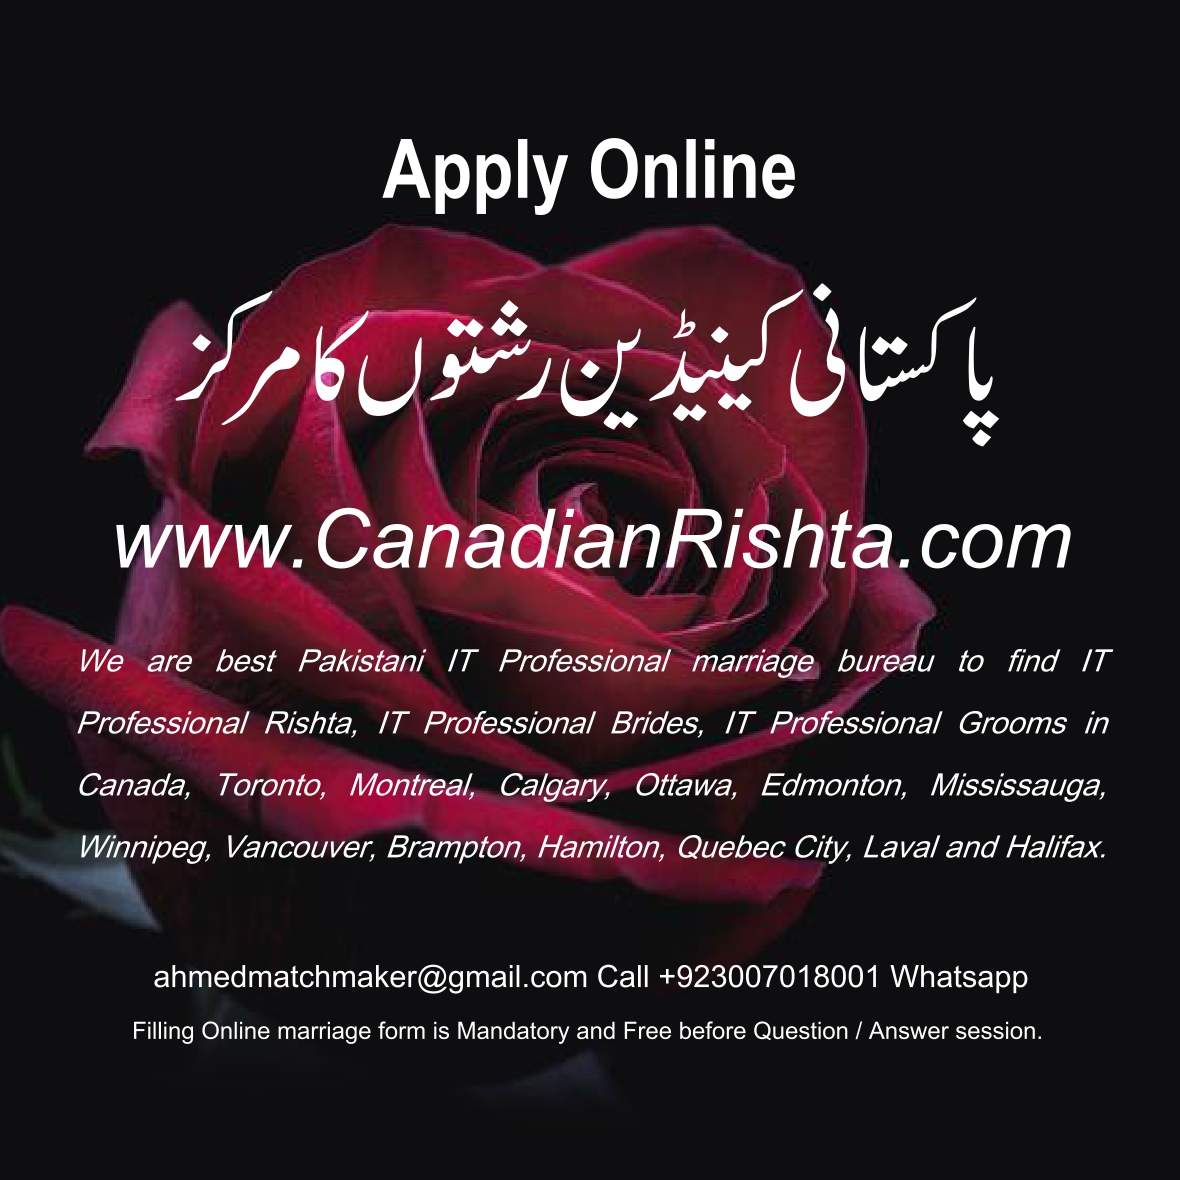 Pakistani-rishta-shaadi-marriage-bureau-Canada-Toronto-Montreal-Calgary-Ottawa-Vancouver-Brampton-Hamilton-Quebec-9.jpg